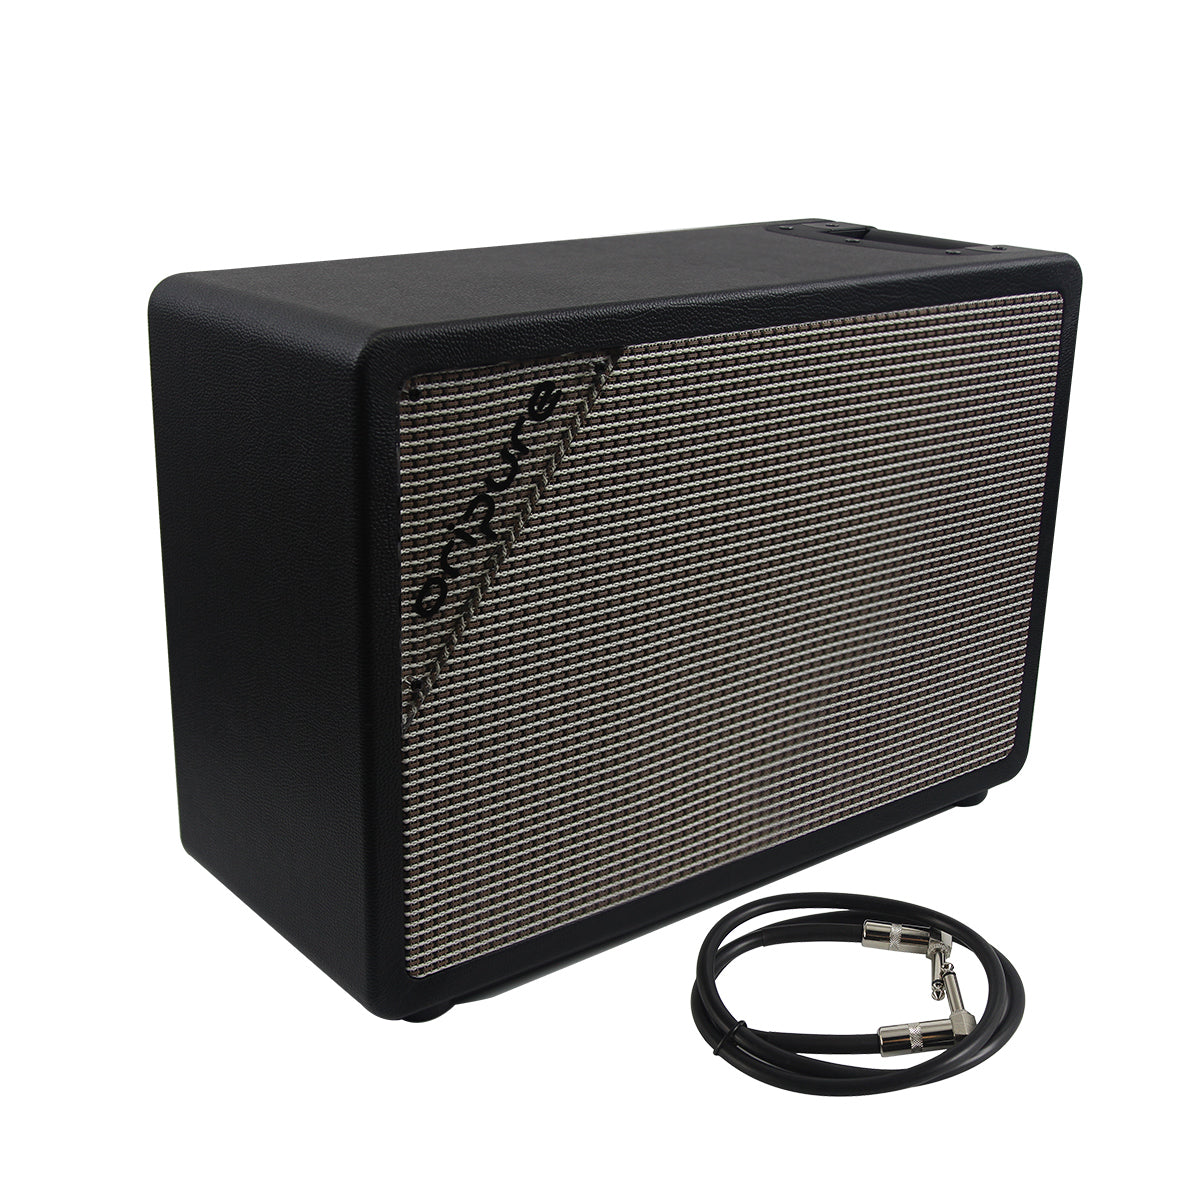 OriPure OA-110 1*10" Guitar Amplifier Cabinet